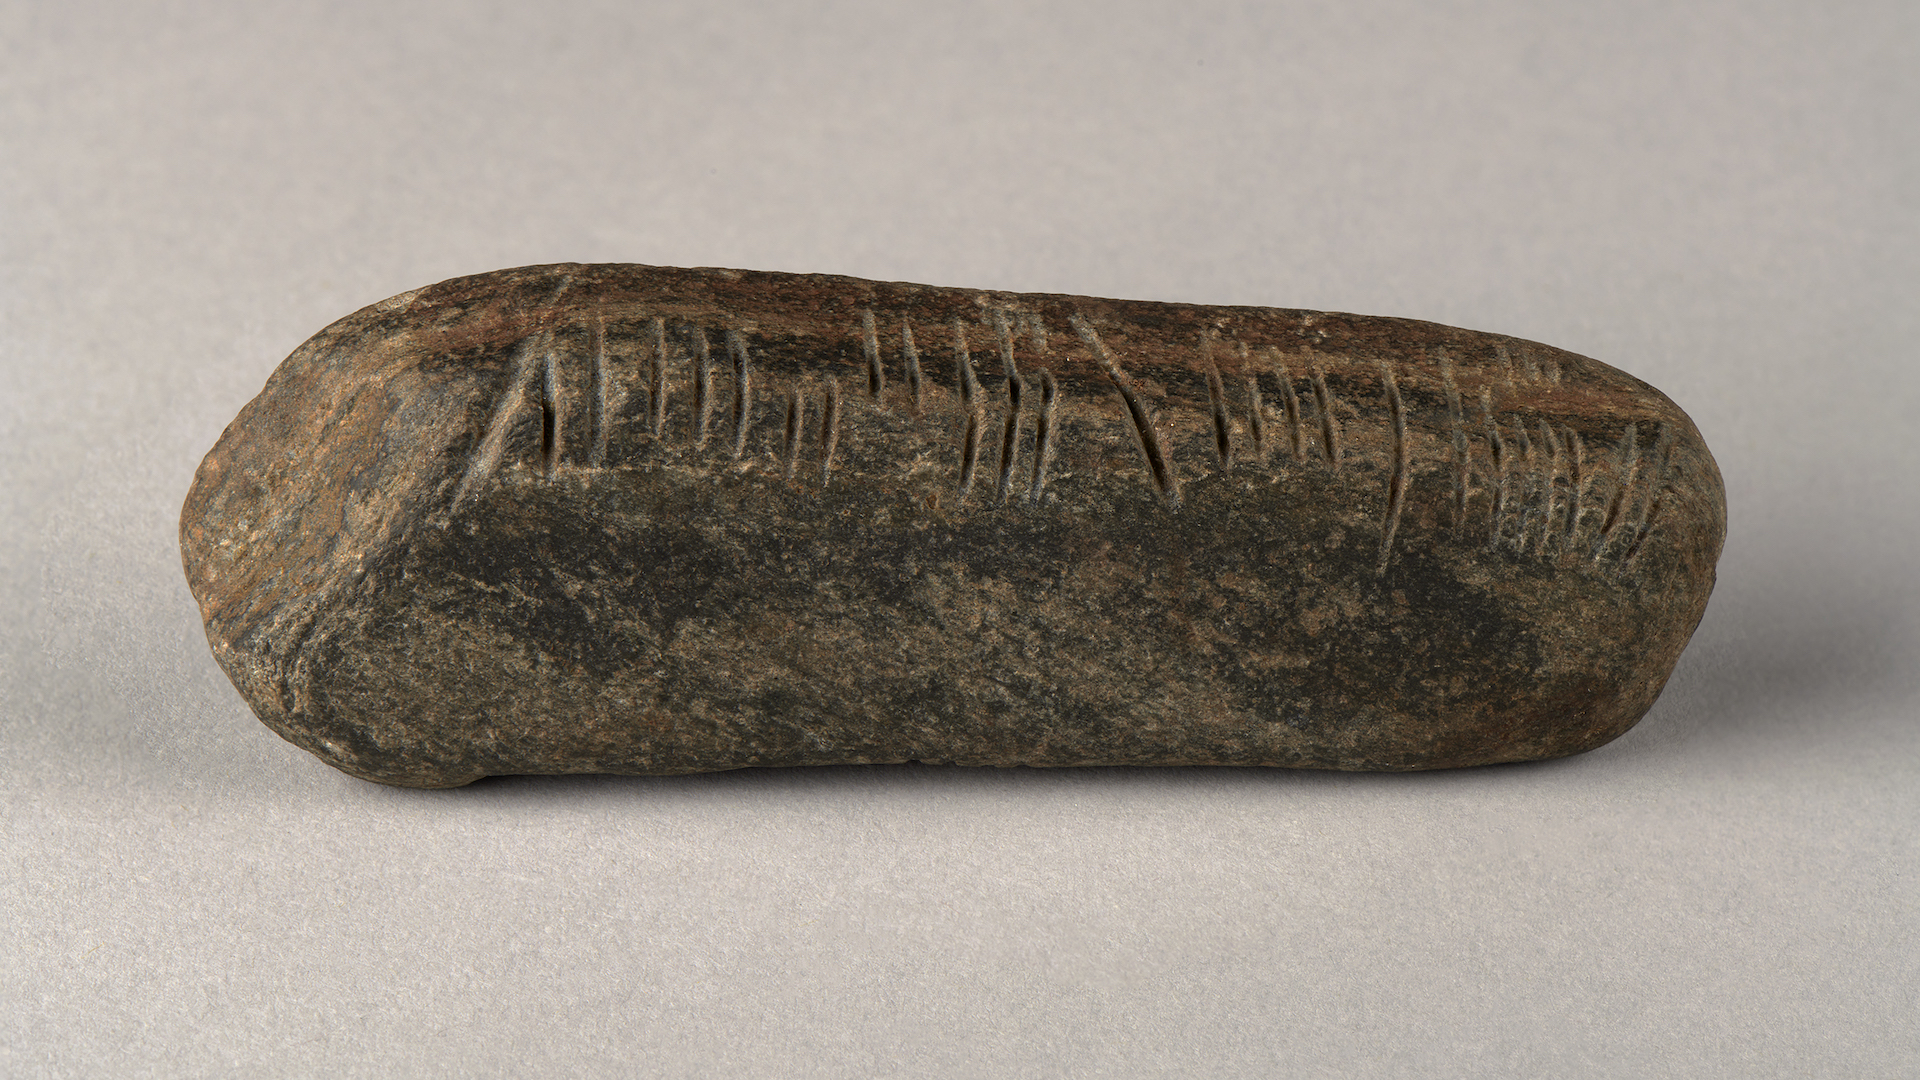 piatra-cu-inscriptie-irlandeza-veche-de-1.600-de-ani-gasita-in-gradina-englezeasca